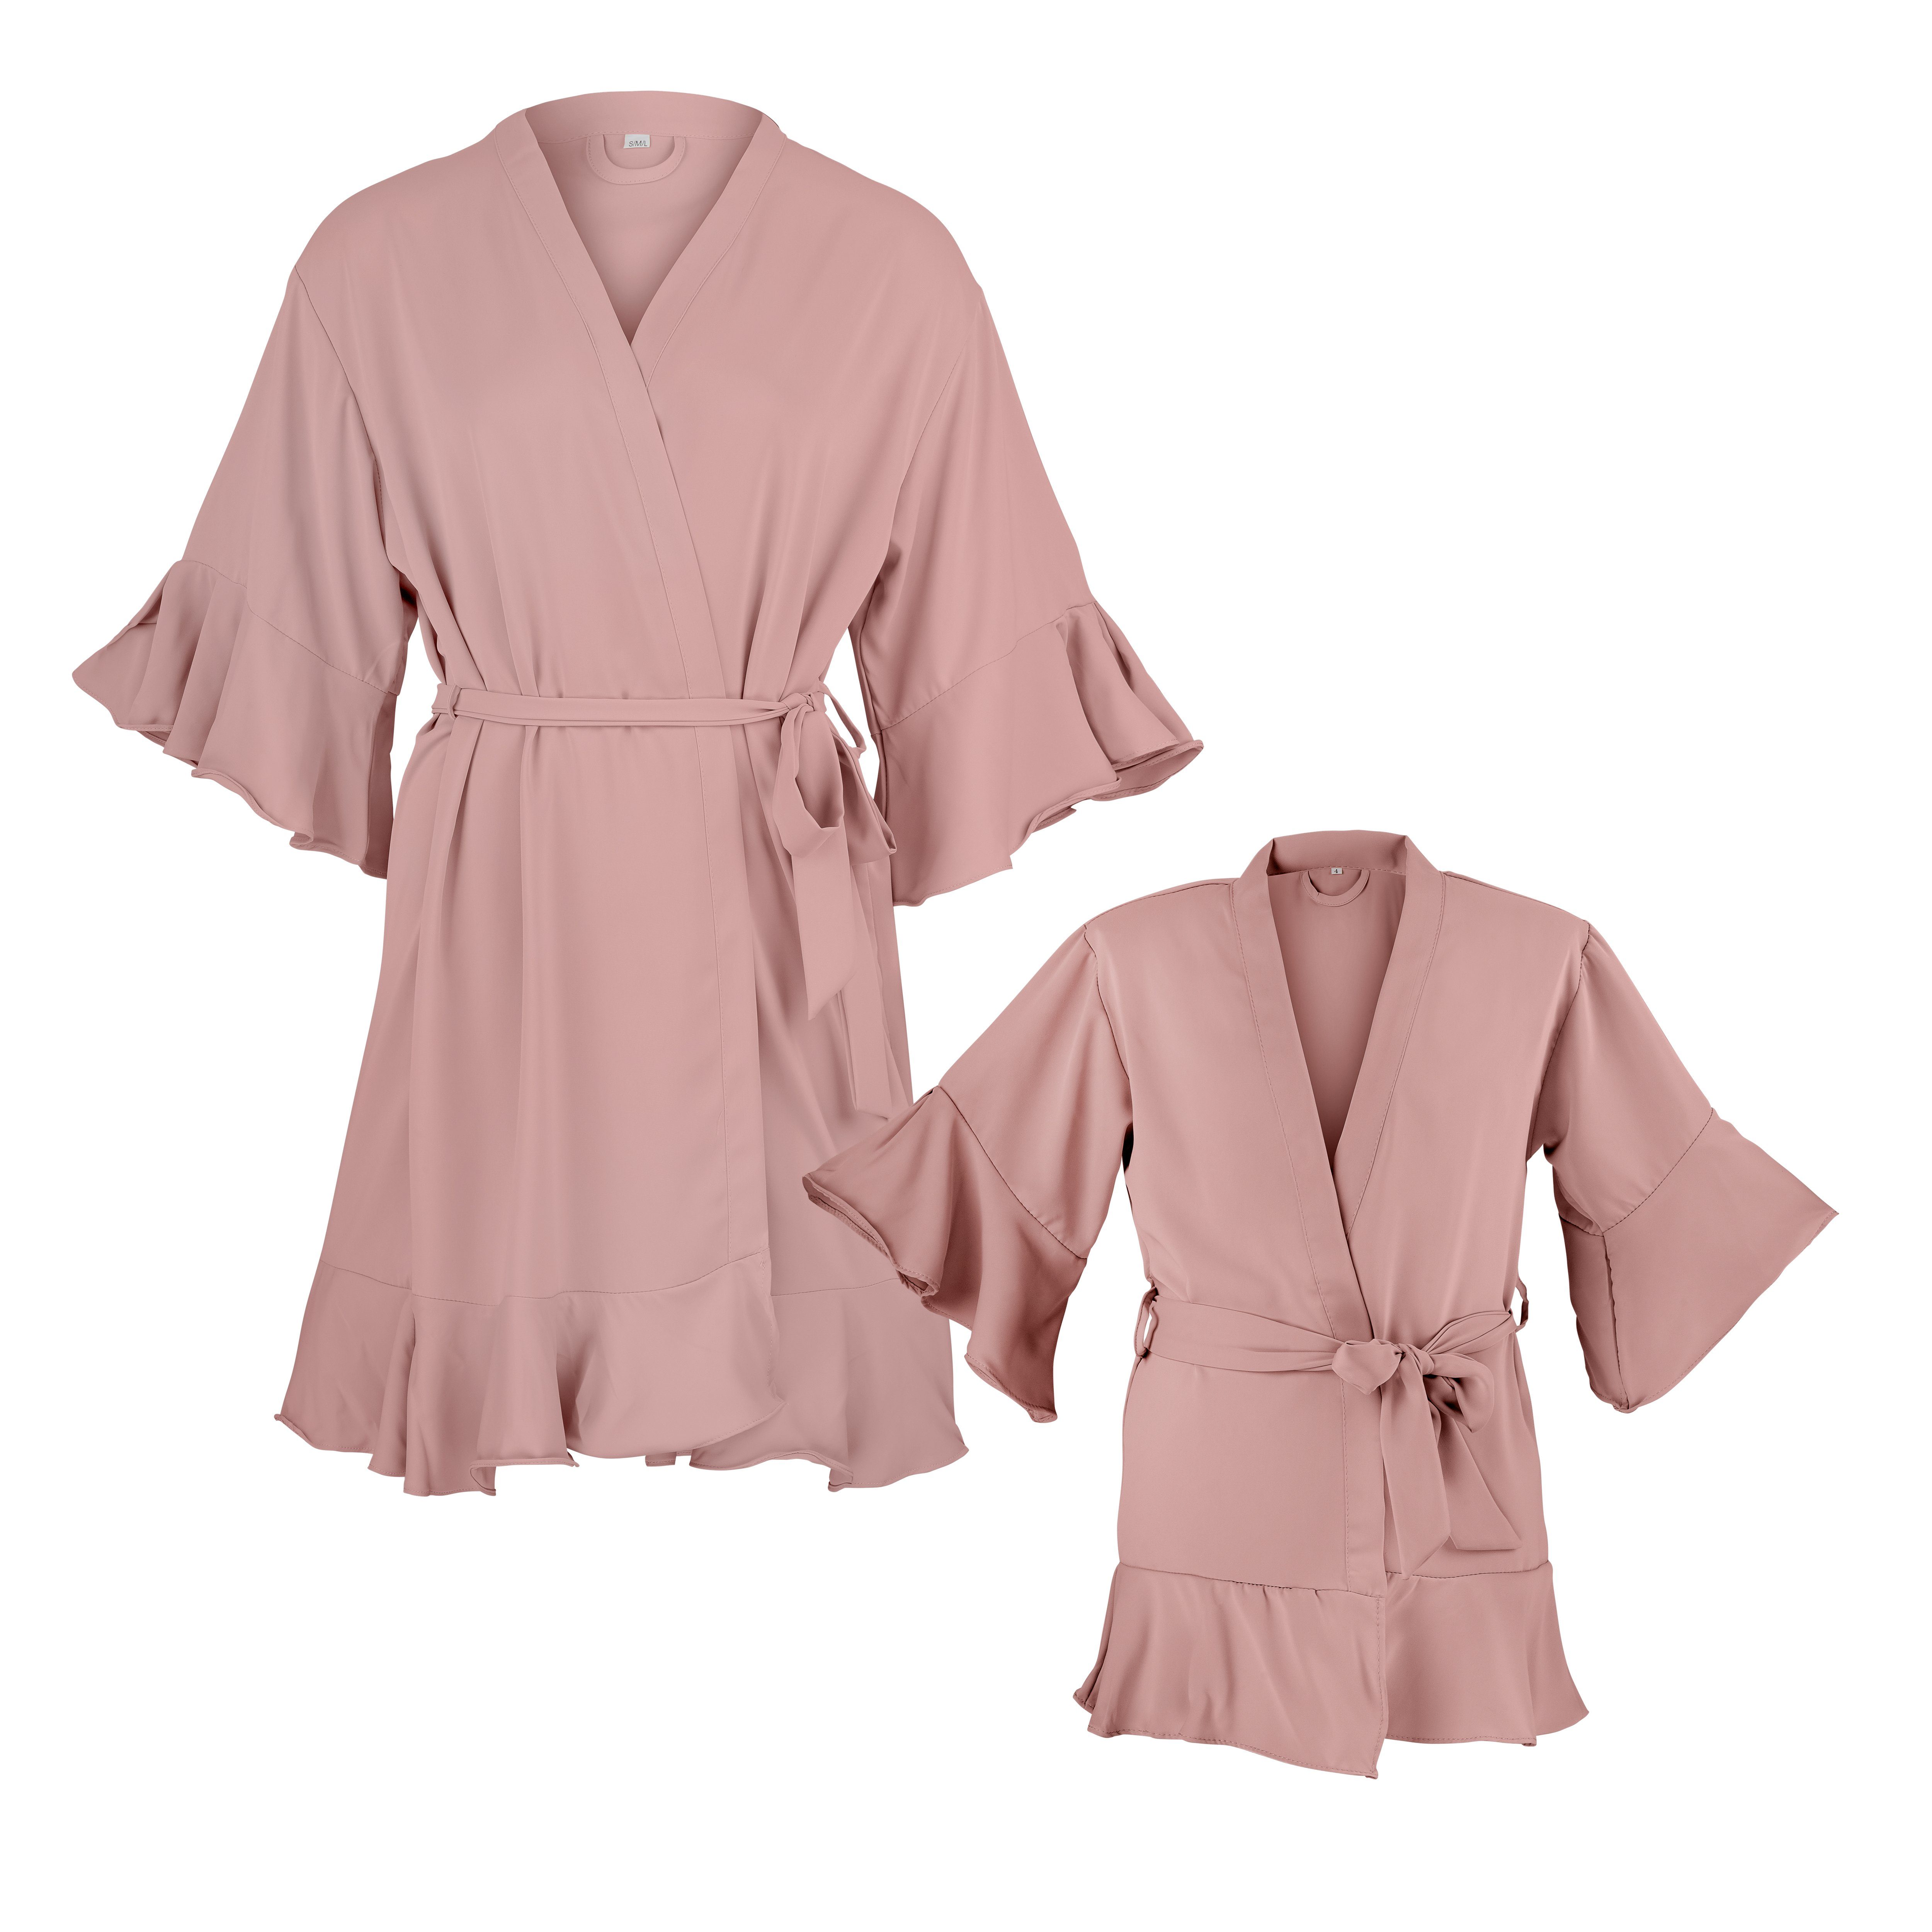 shopandmarry Kimono Kimono für Mutter und Tochter “ruffles”, Kimono-Kragen, Bindegürtel, Mini Me Set rosé